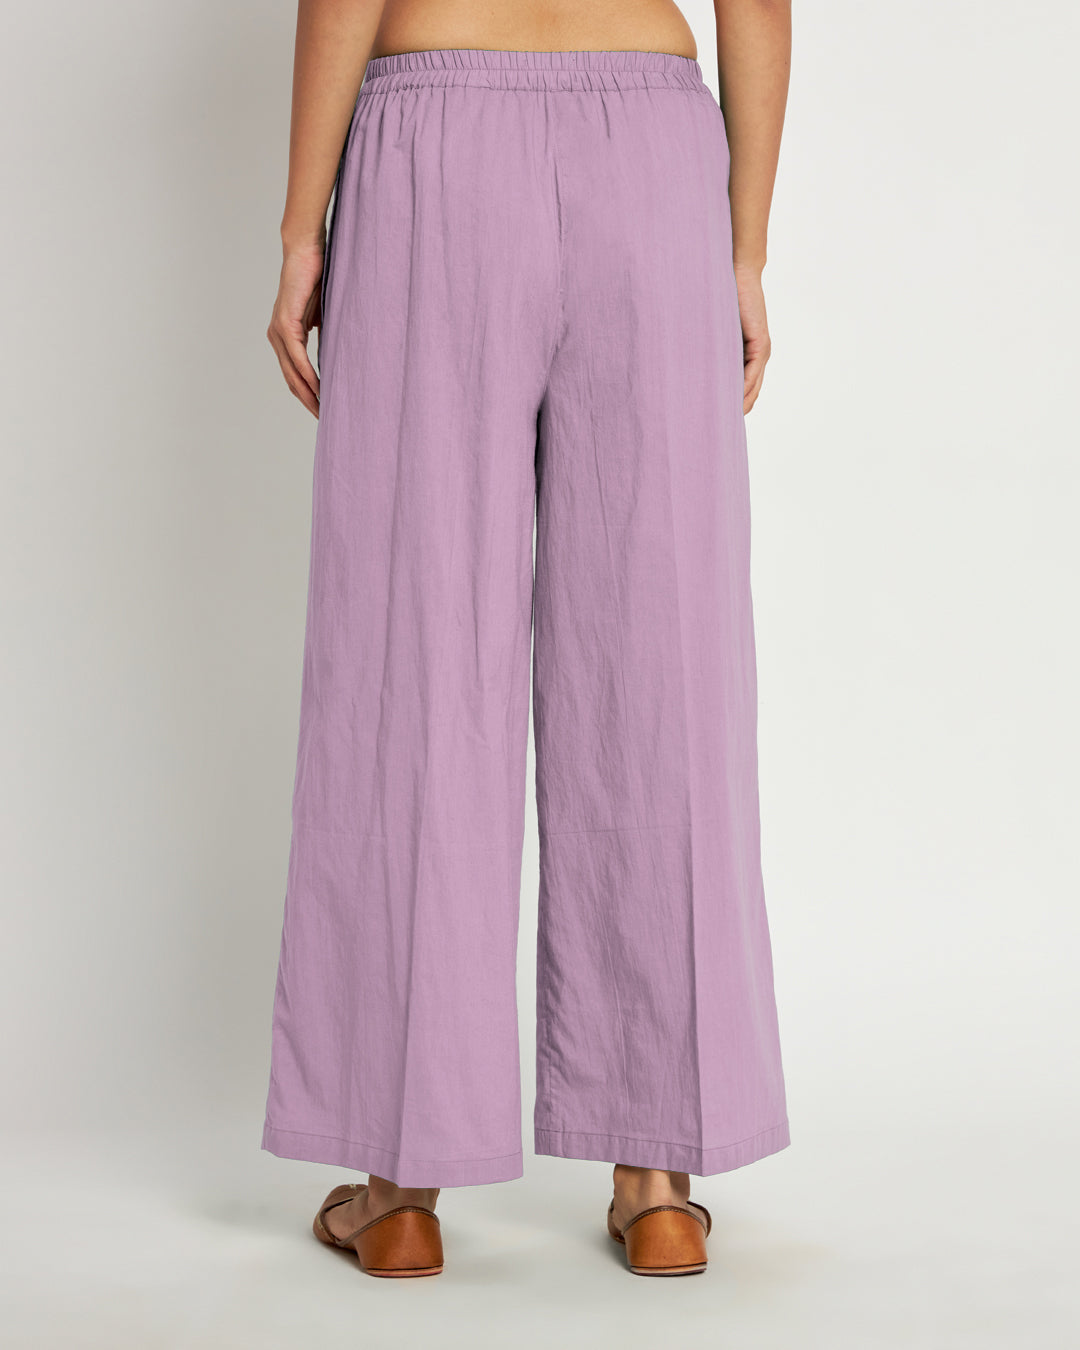 Combo: Black & Iris Pink Wide Pants- Set Of 2